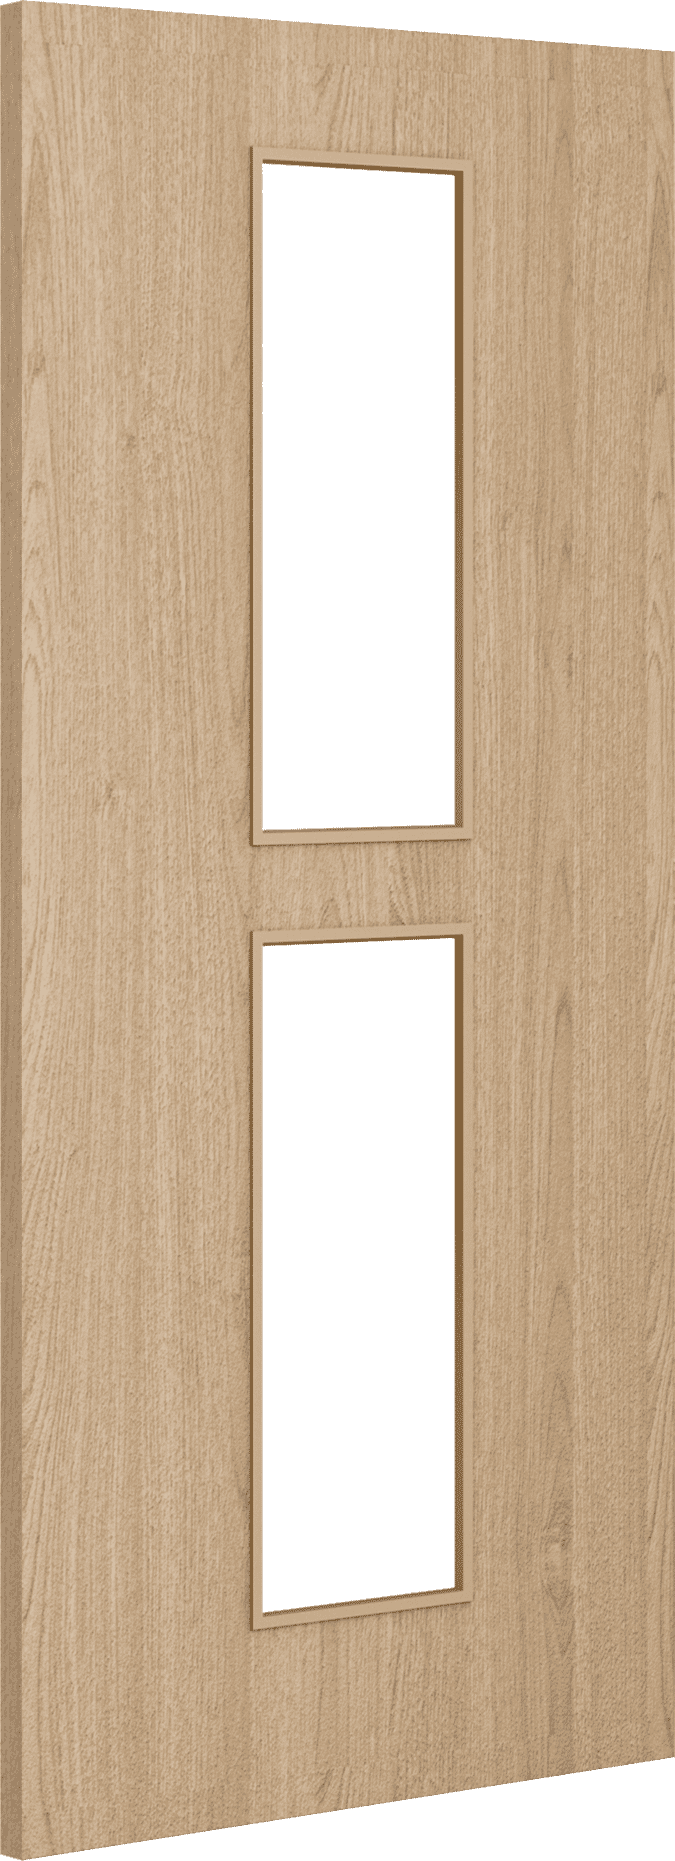 1981mm x 457mm x 44mm (18") Architectural Oak 12 Frosted Glazed - Prefinished FD30 Fire Door Blank